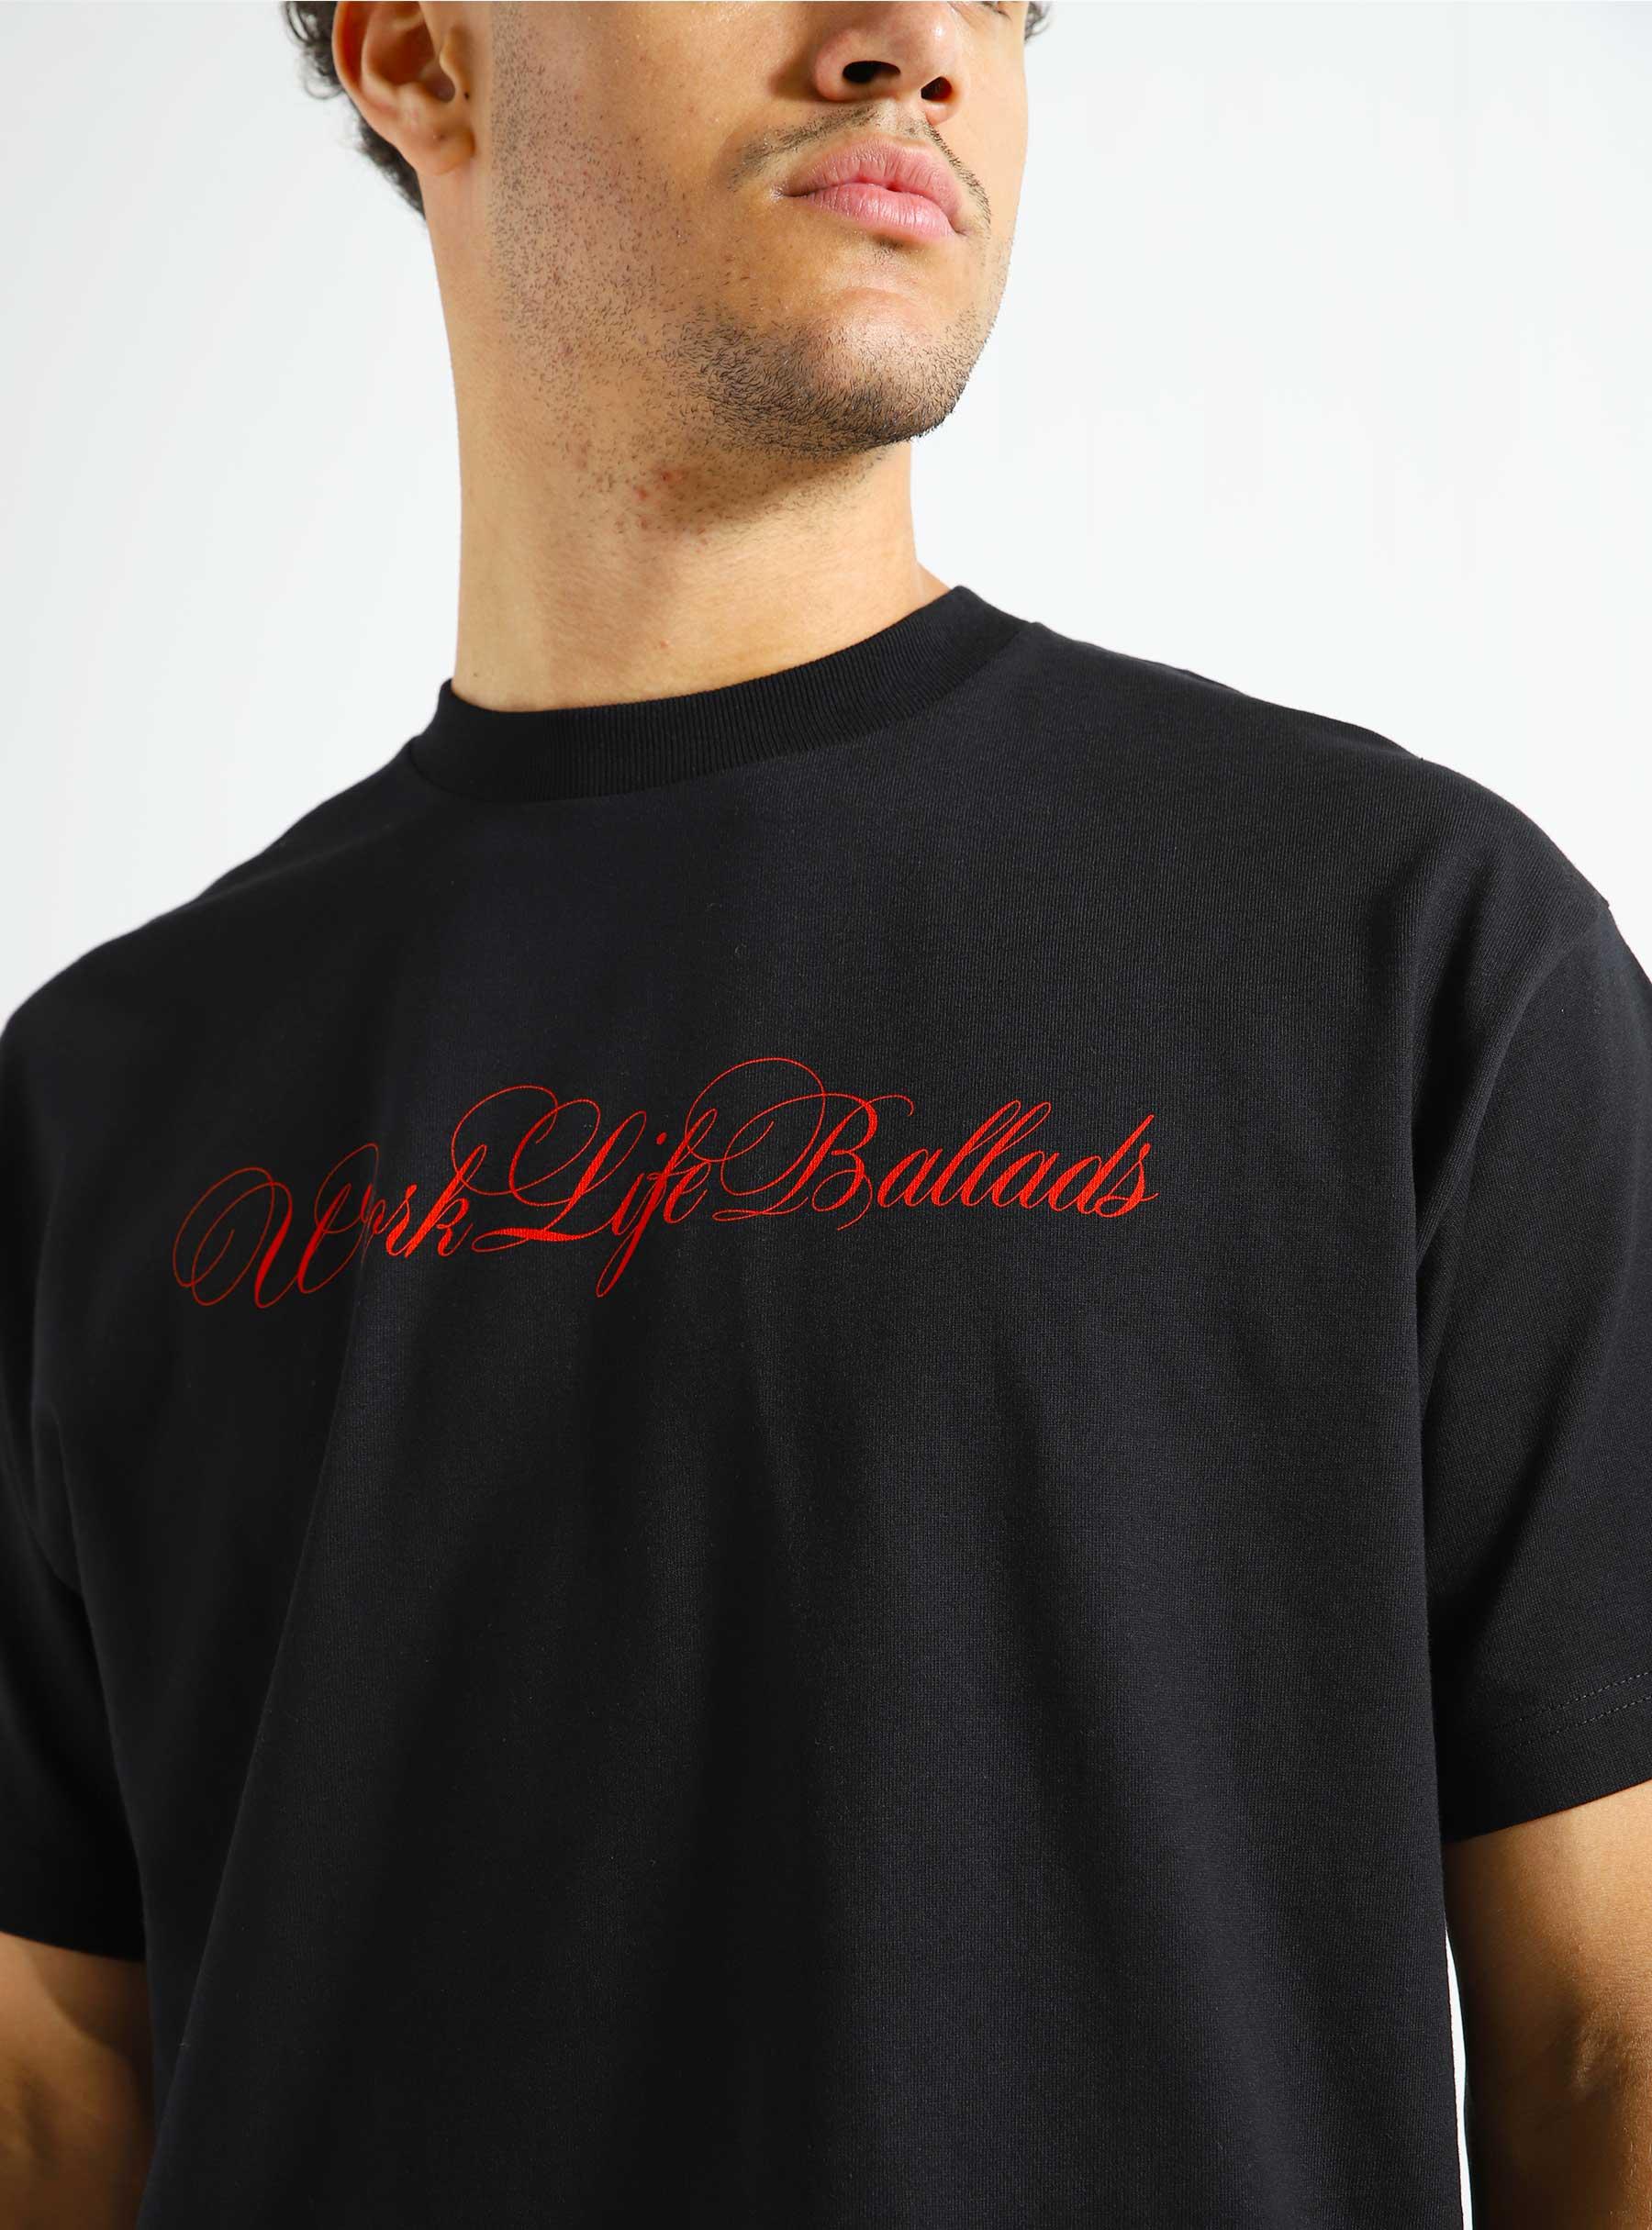 Work Life Ballads T-Shirt Black Red I032388-1V2XX